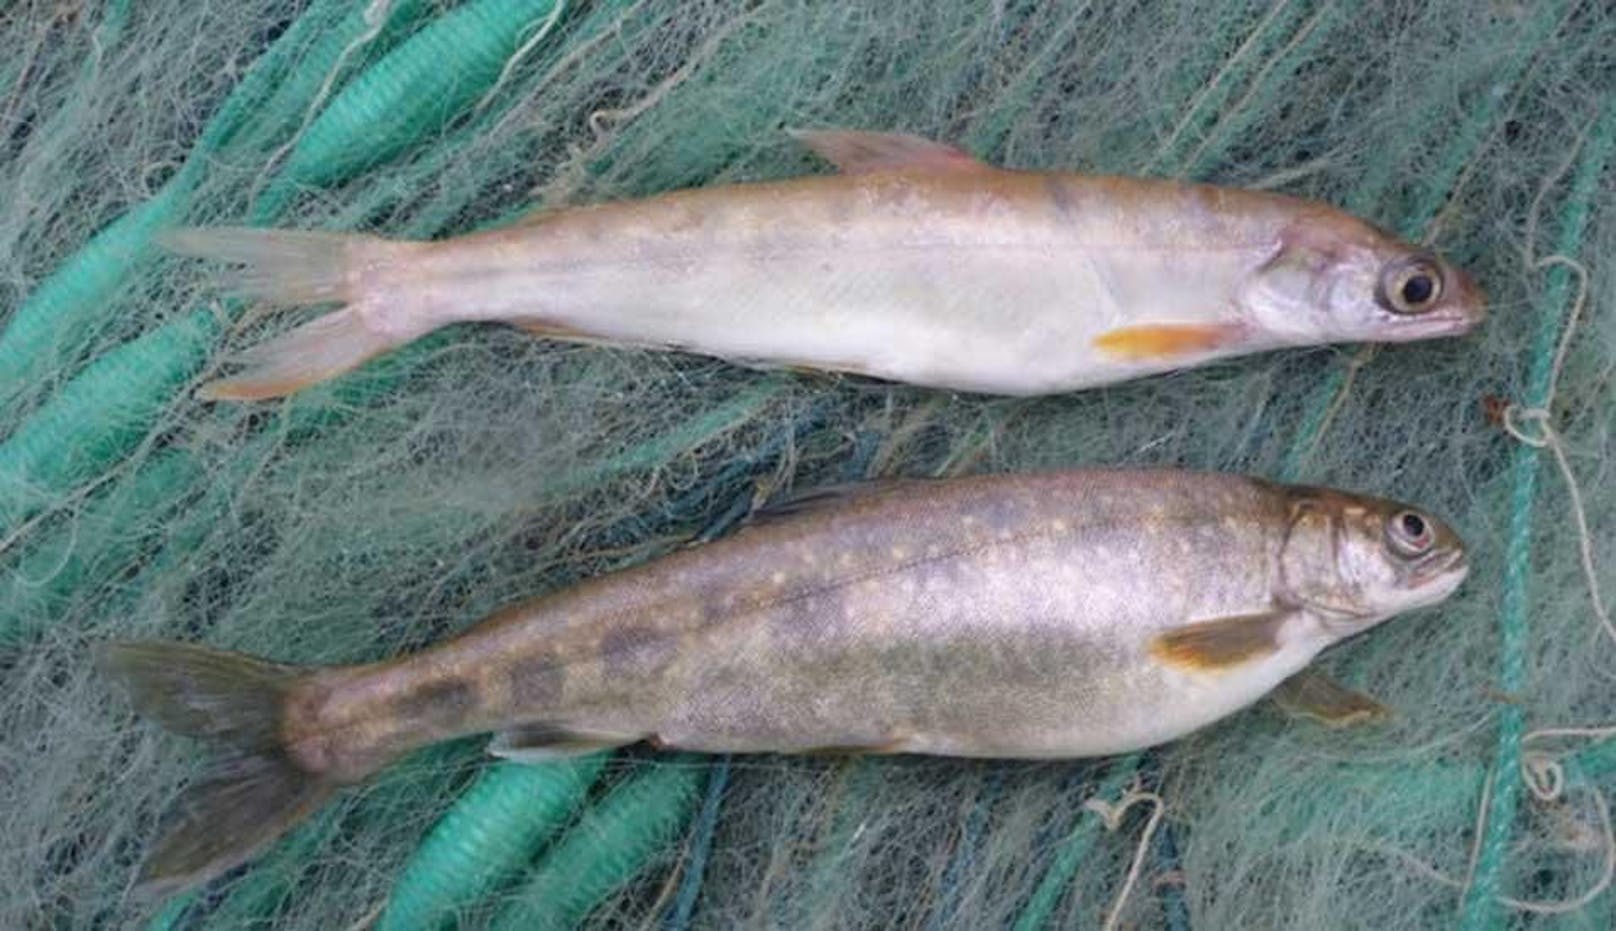 Forscher lösen Rätsel um mysteriösen Tiefseefisch im Bodensee